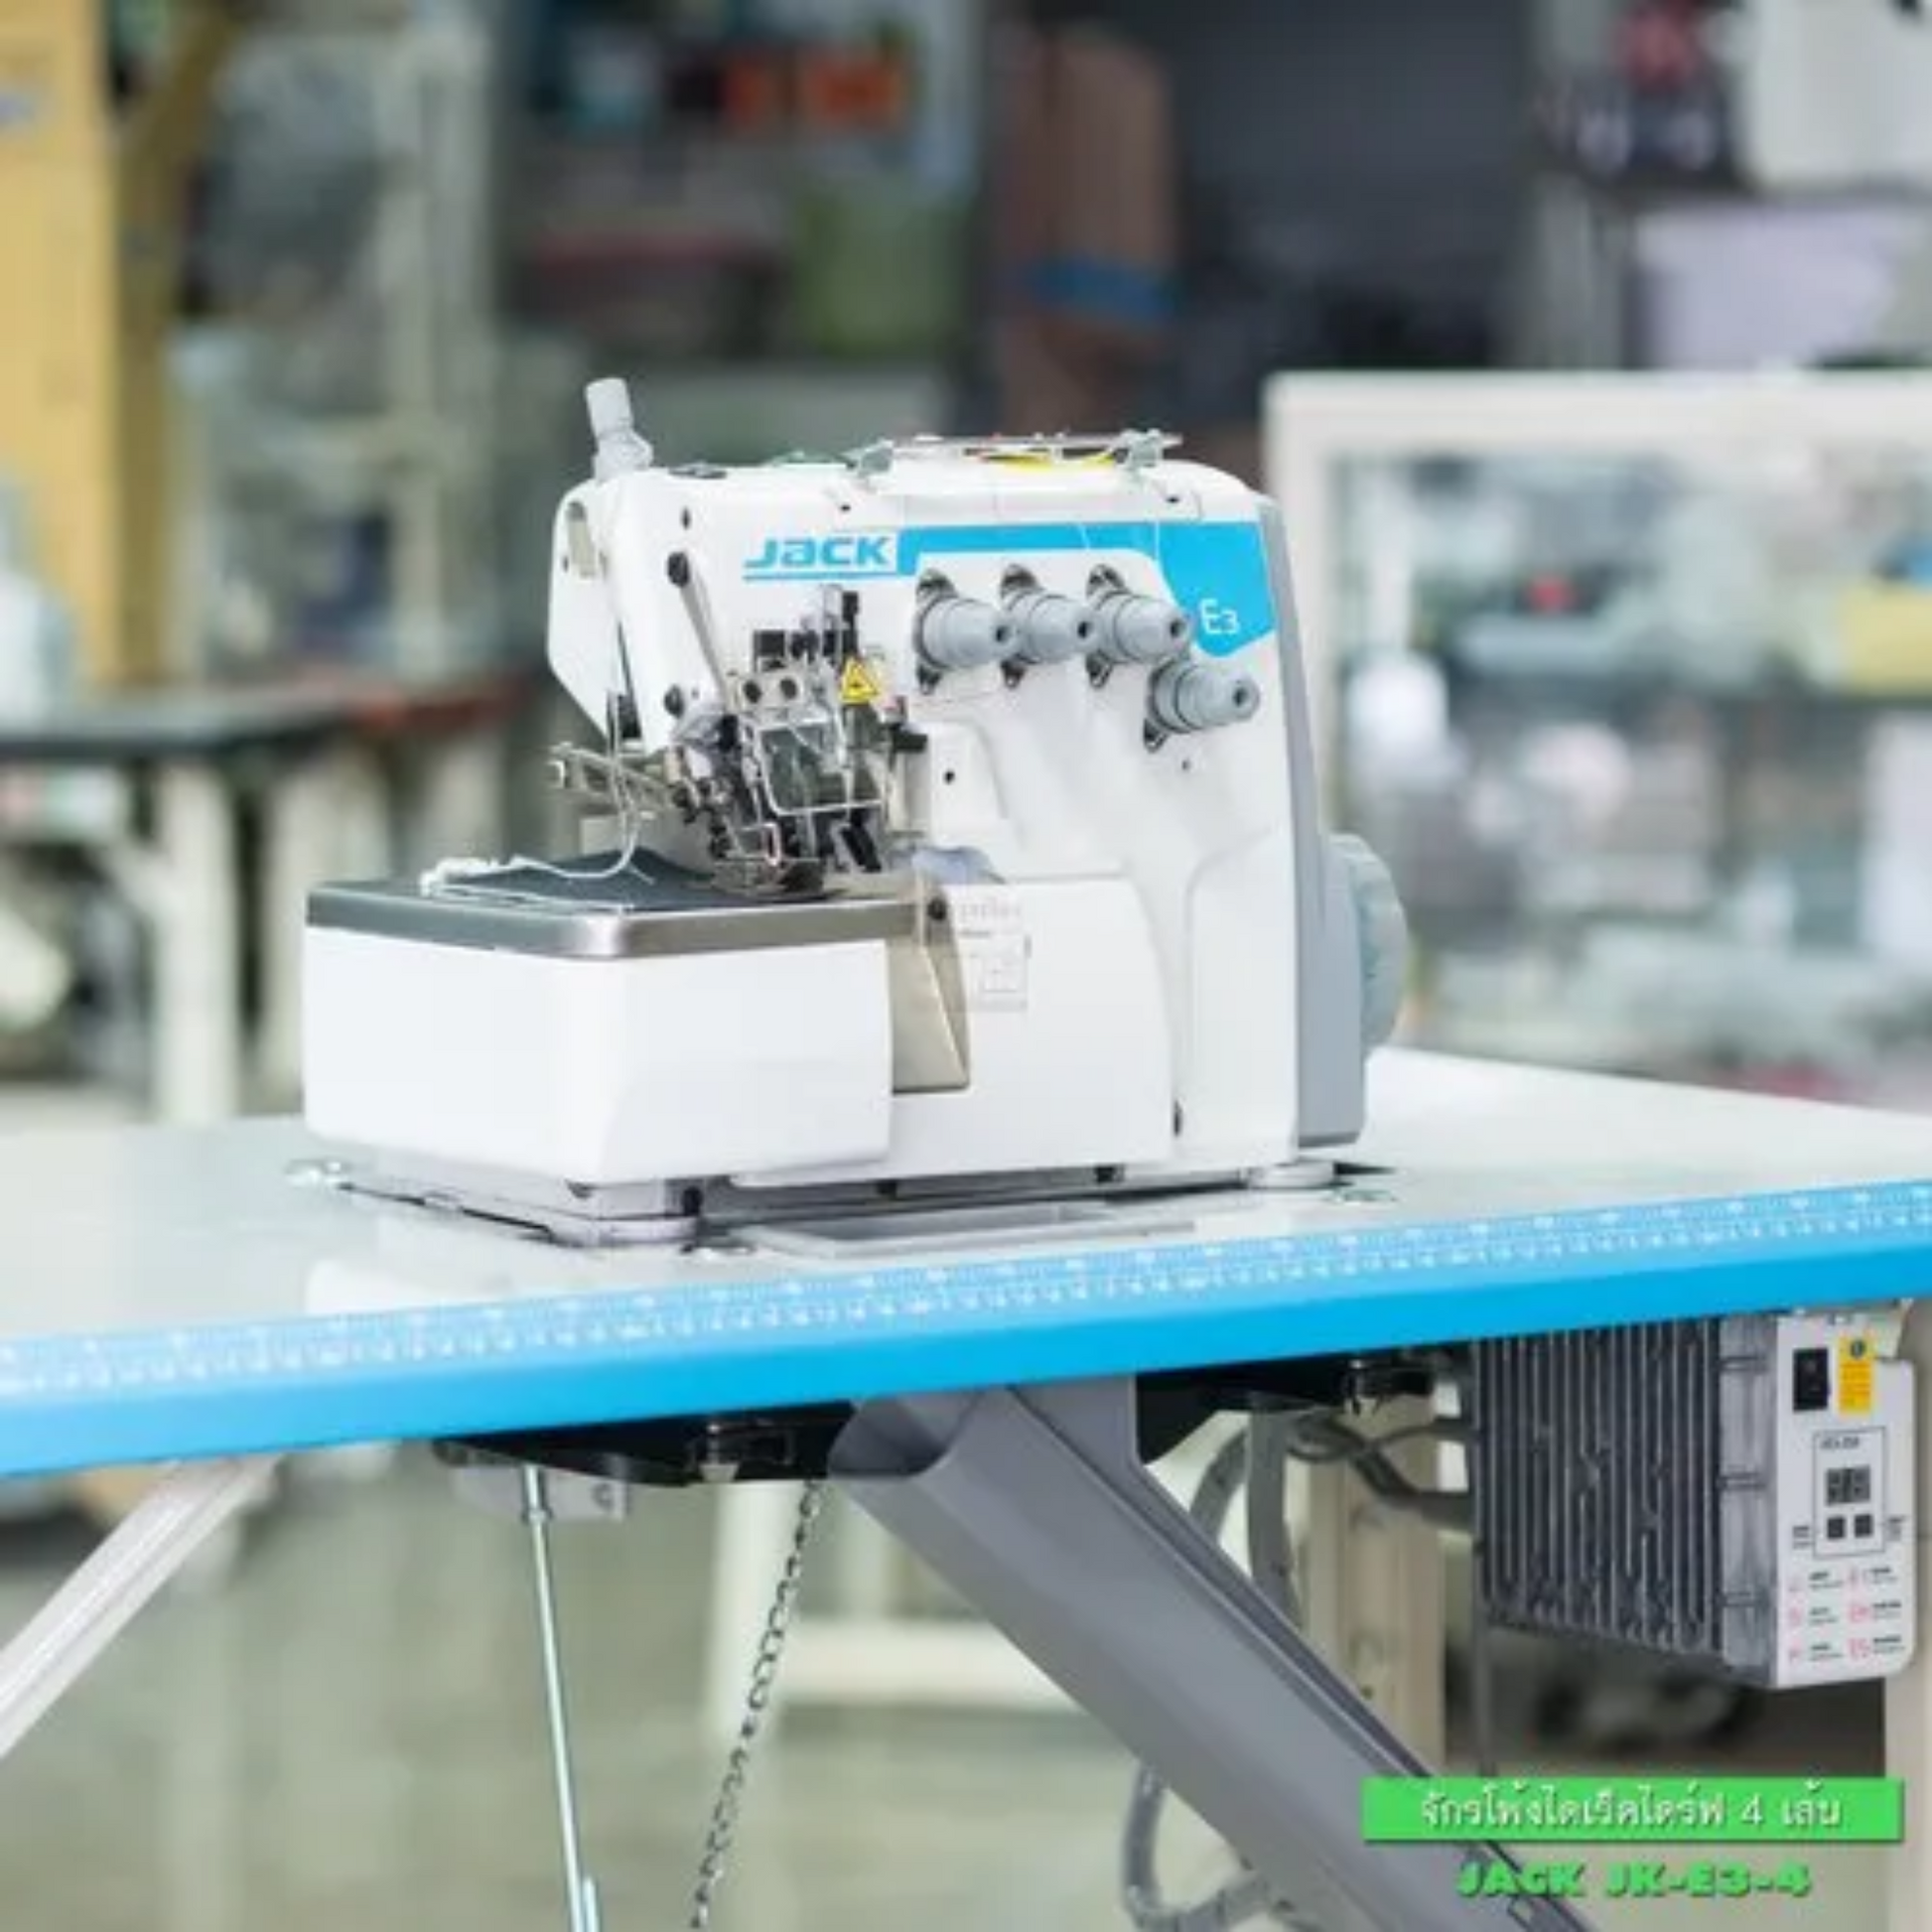 Jack E3 Model 5-thread  - Overlock sewing machine - Multi color - Side view